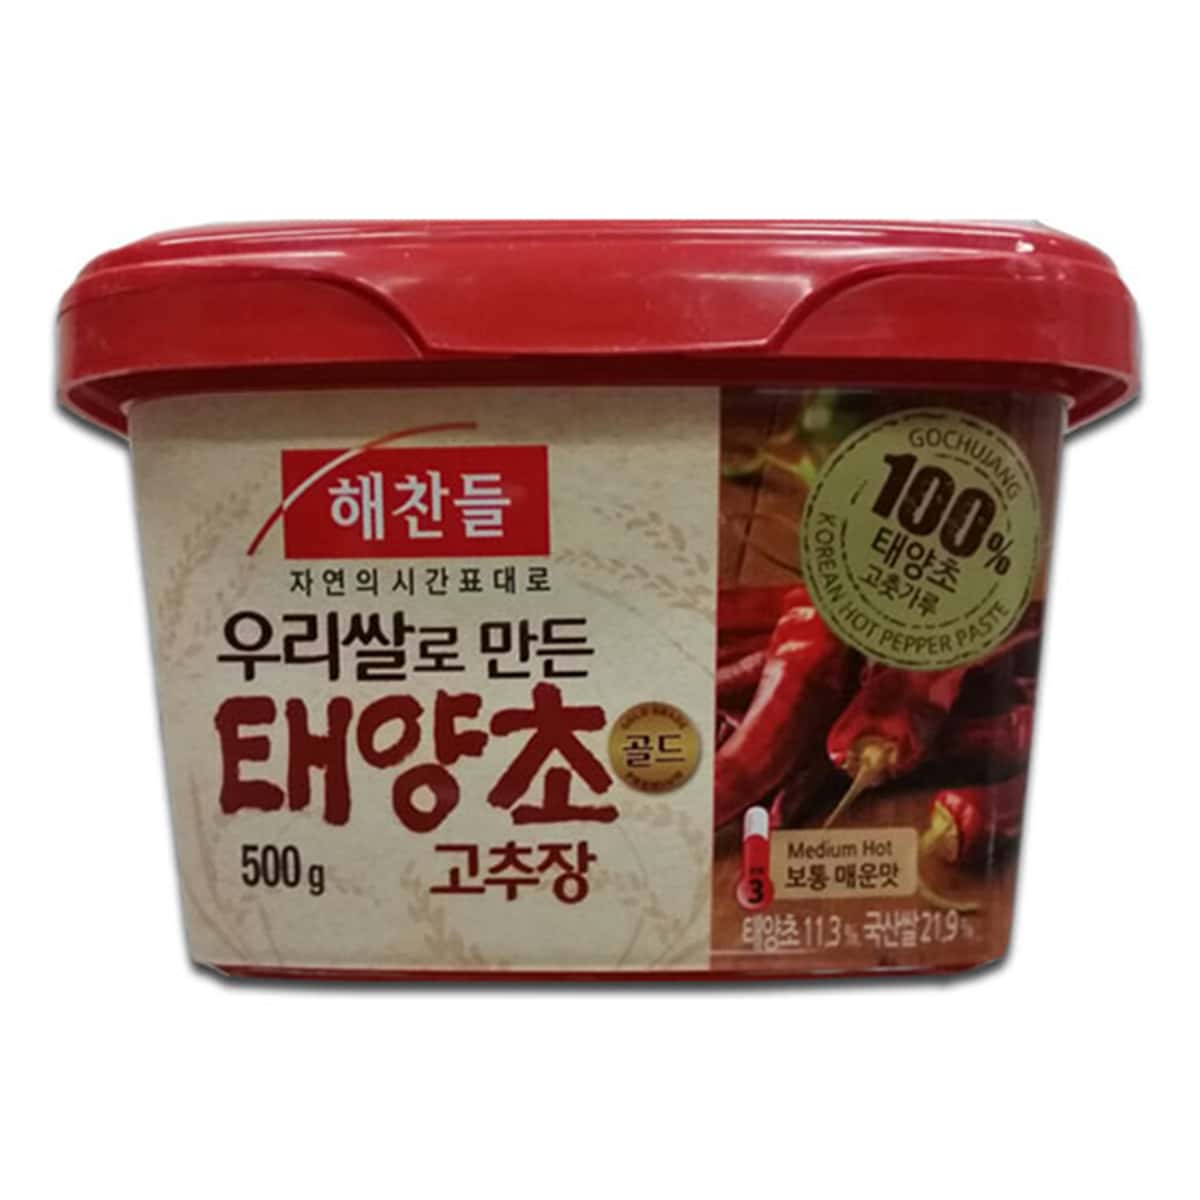 Buy CJ Haechandle Gochujang (Korean Hot Pepper Paste) Medium Hot - 500 gm